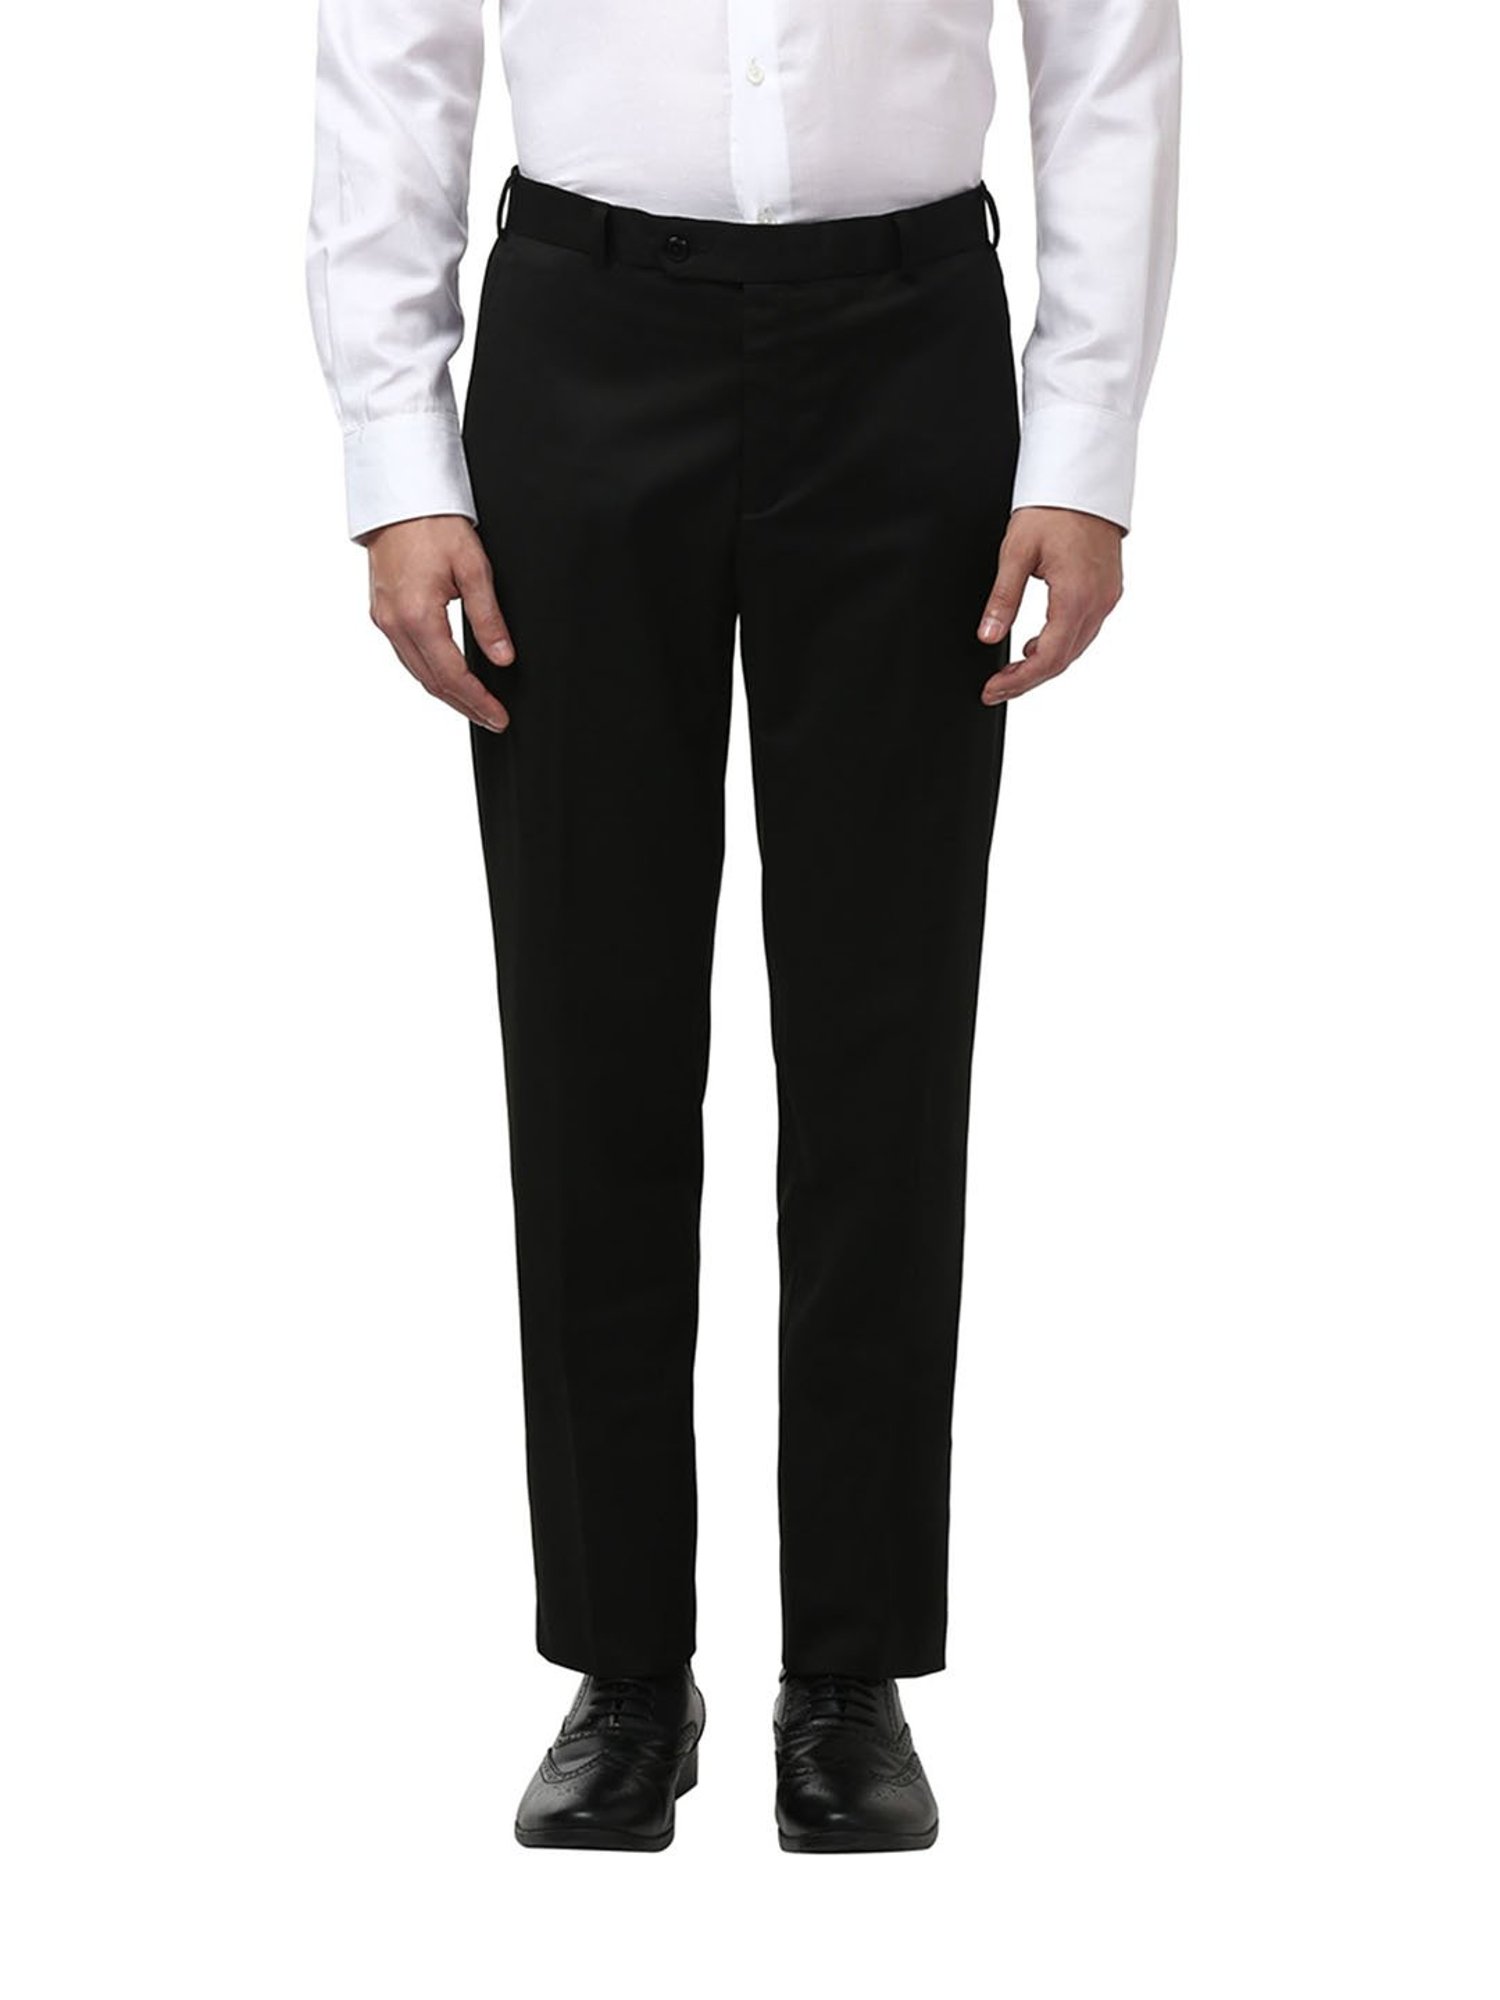 Buy Men Black Solid Regular Fit Trousers Online  173298  Peter England